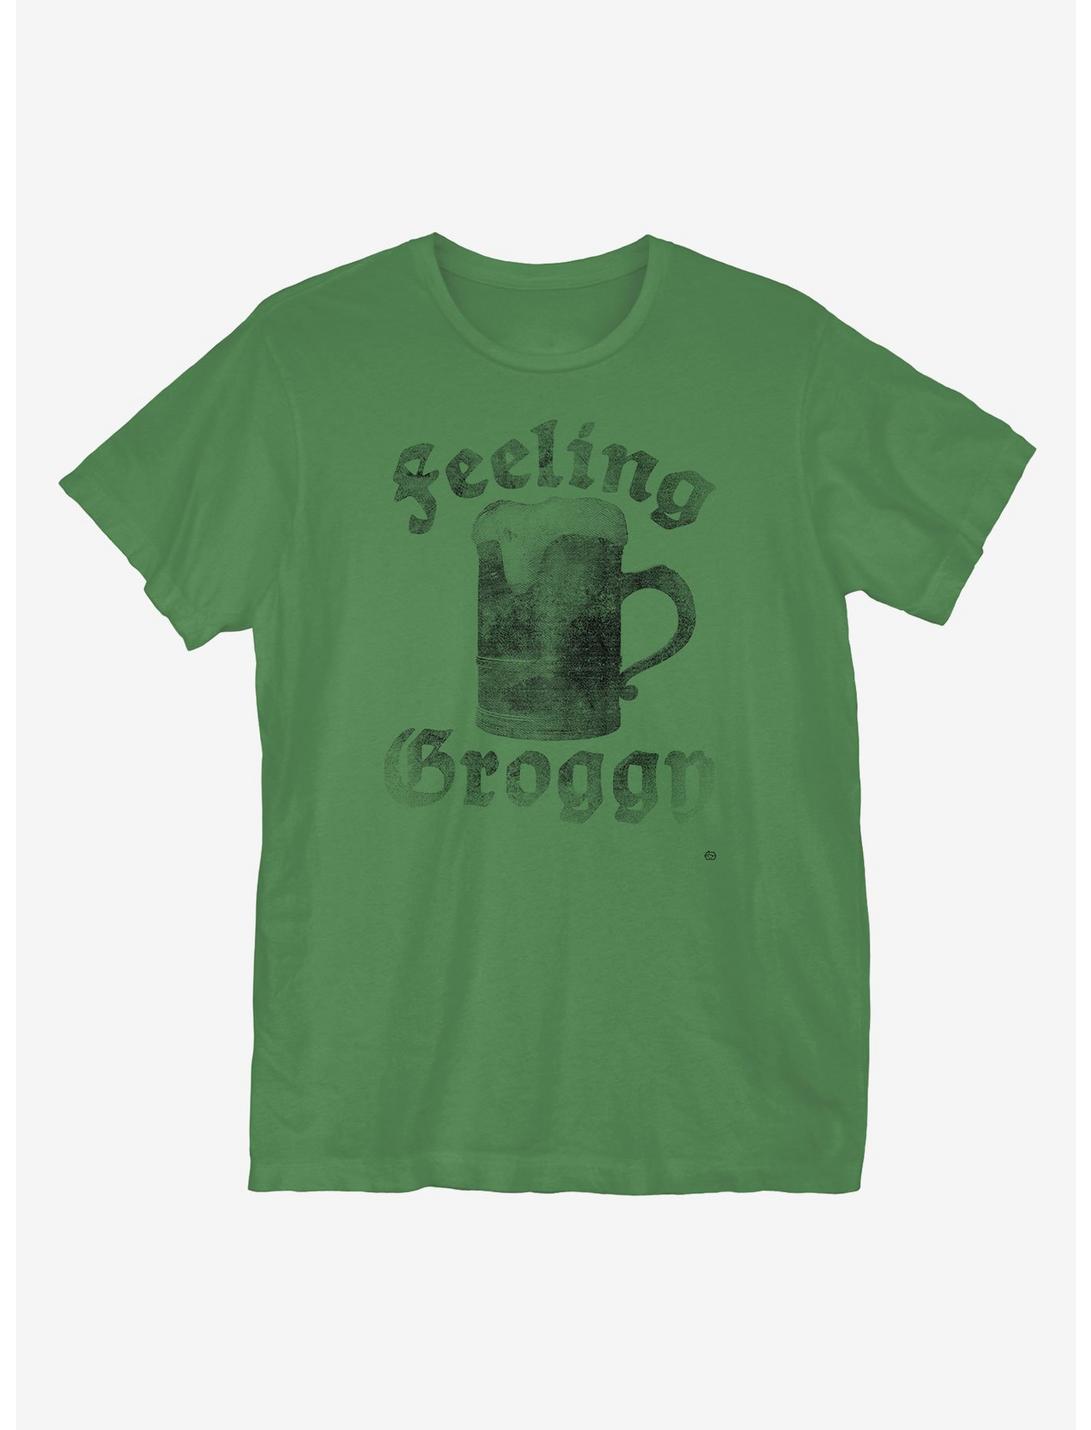 Feeling Groggy T-Shirt, KELLY GREEN, hi-res